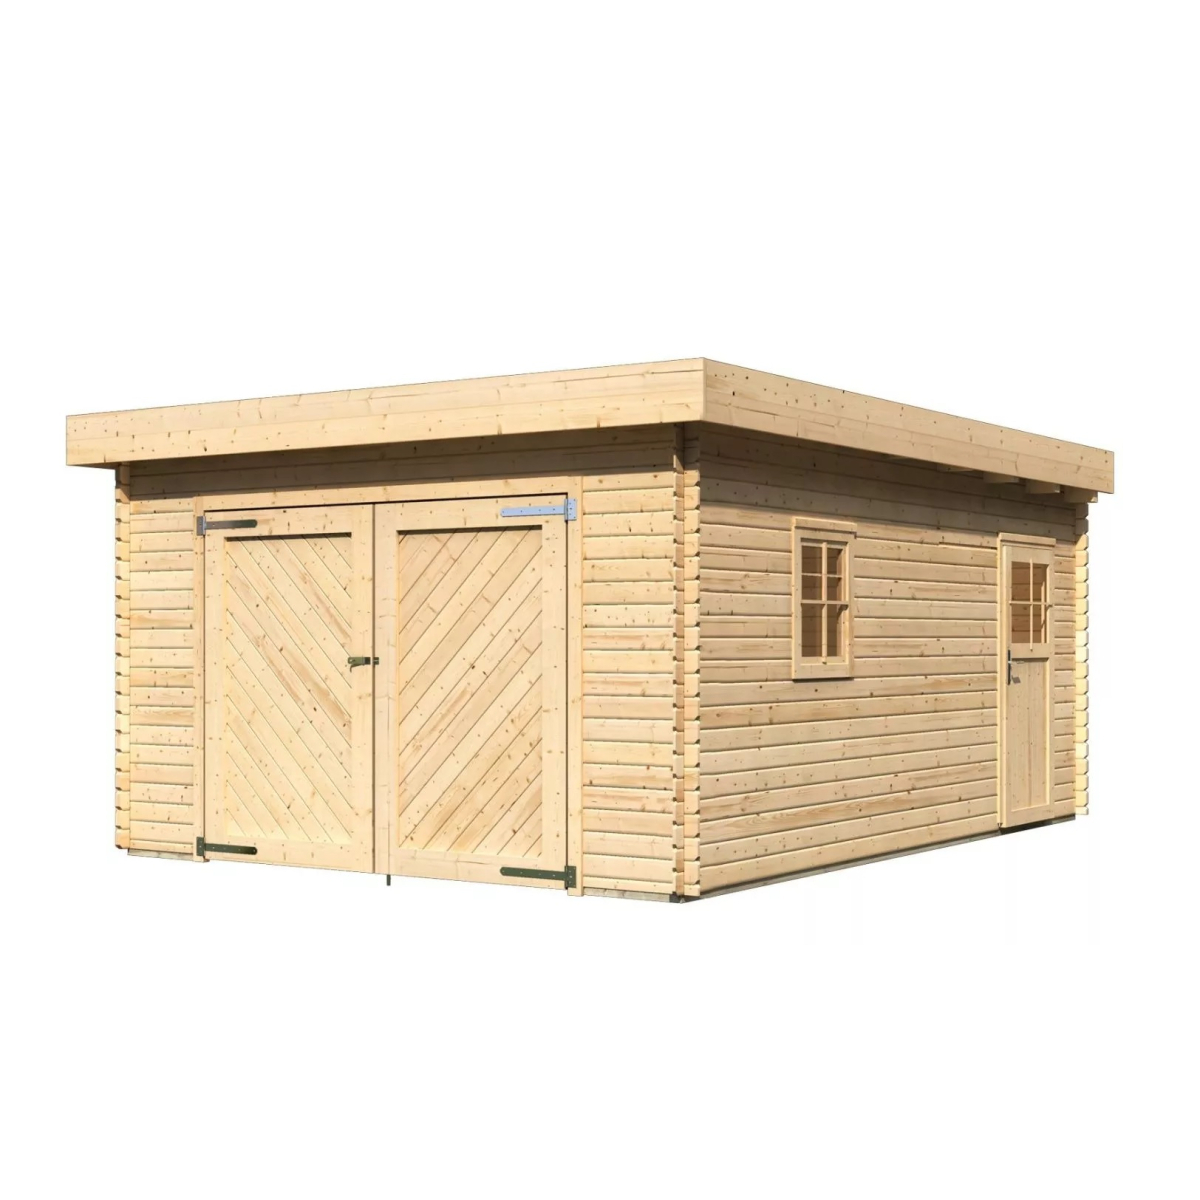 LANIT PLAST dřevěná garáž KARIBU FLACHDACH 9140 natur LG3395